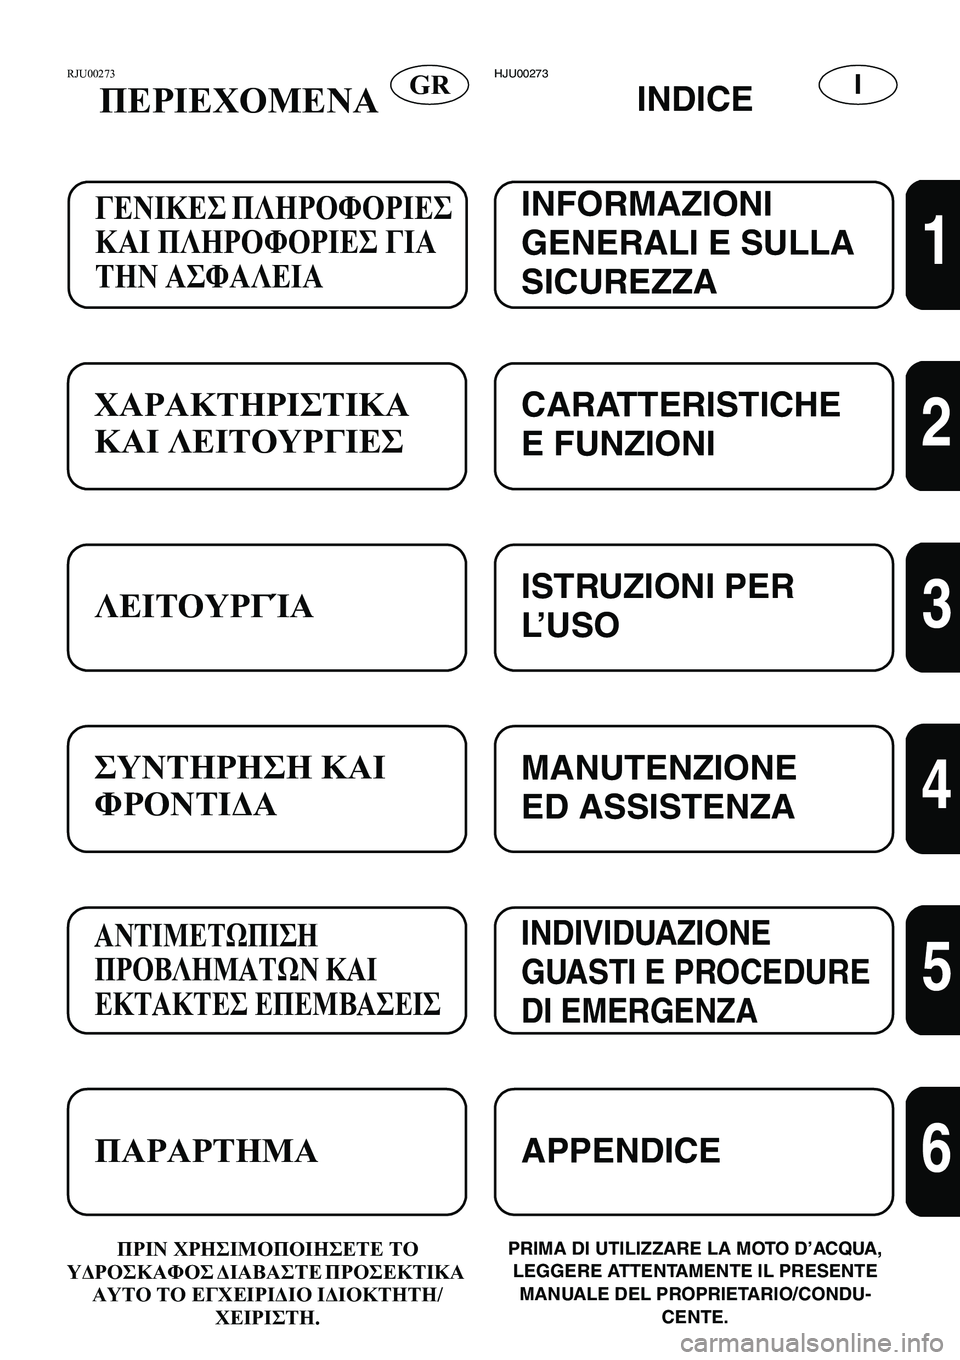 YAMAHA GP1200 2001  Manuale duso (in Italian) �*�5I�5�-�8�����
üÿüüù
